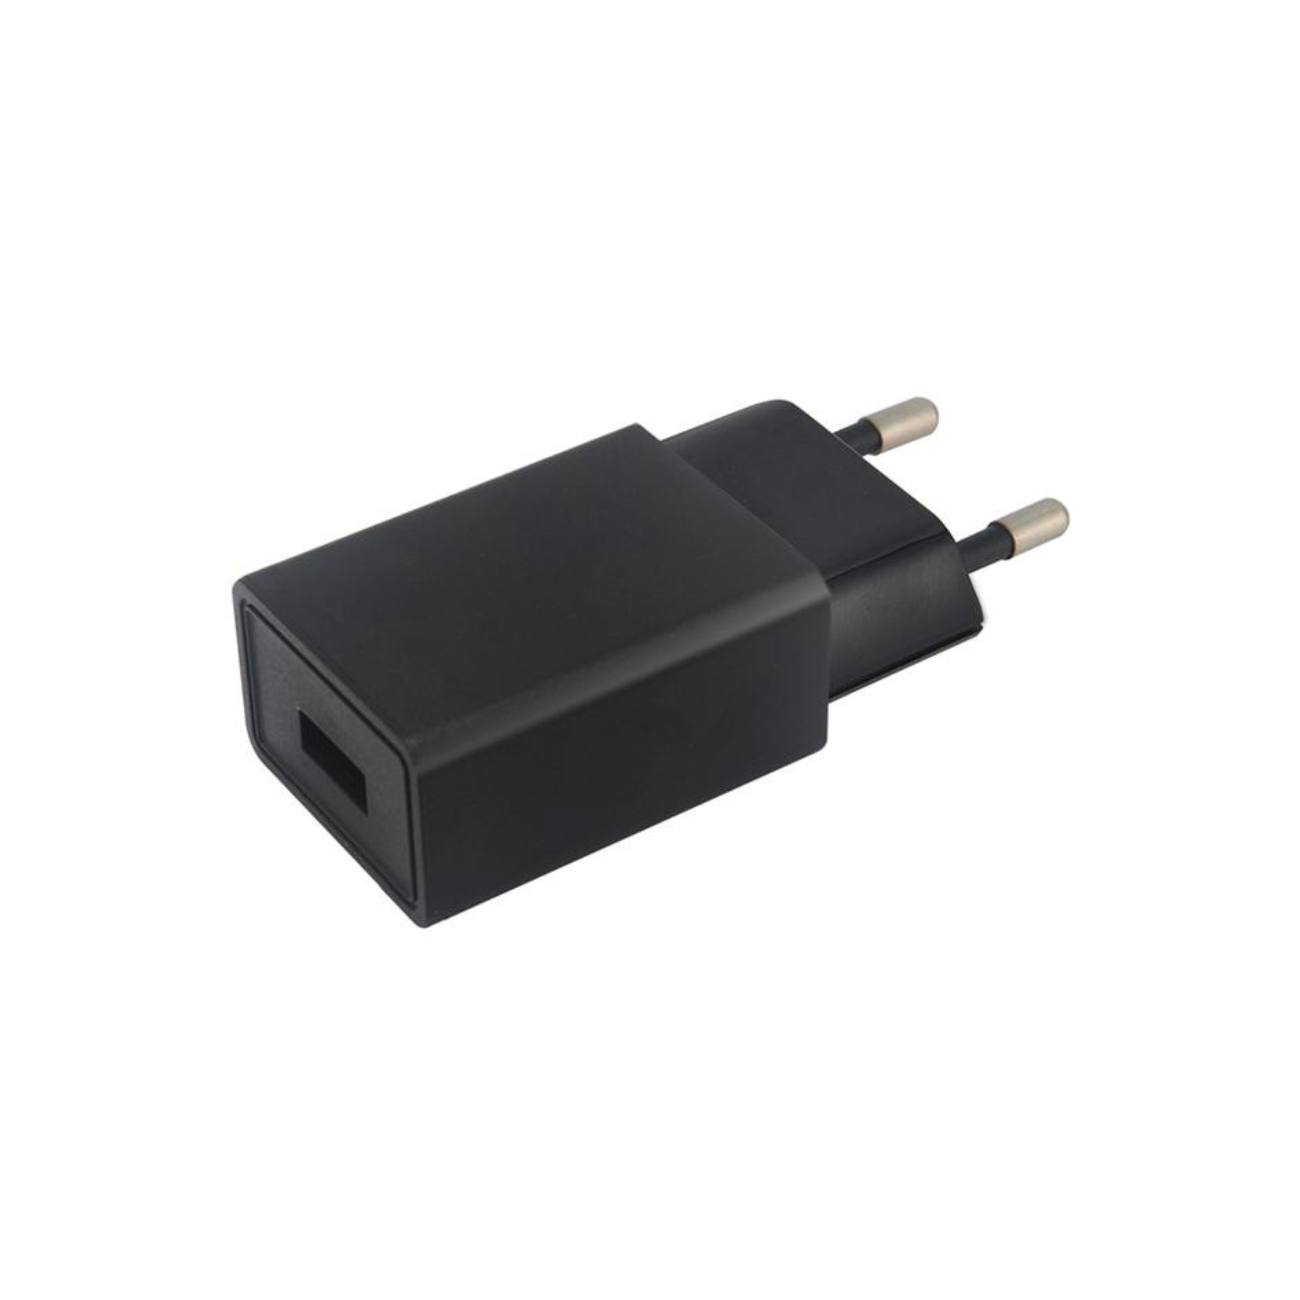 Yingjiao YS10-0502100 USB (10,5W/5V) Steckernetzteil mit Eurostecker